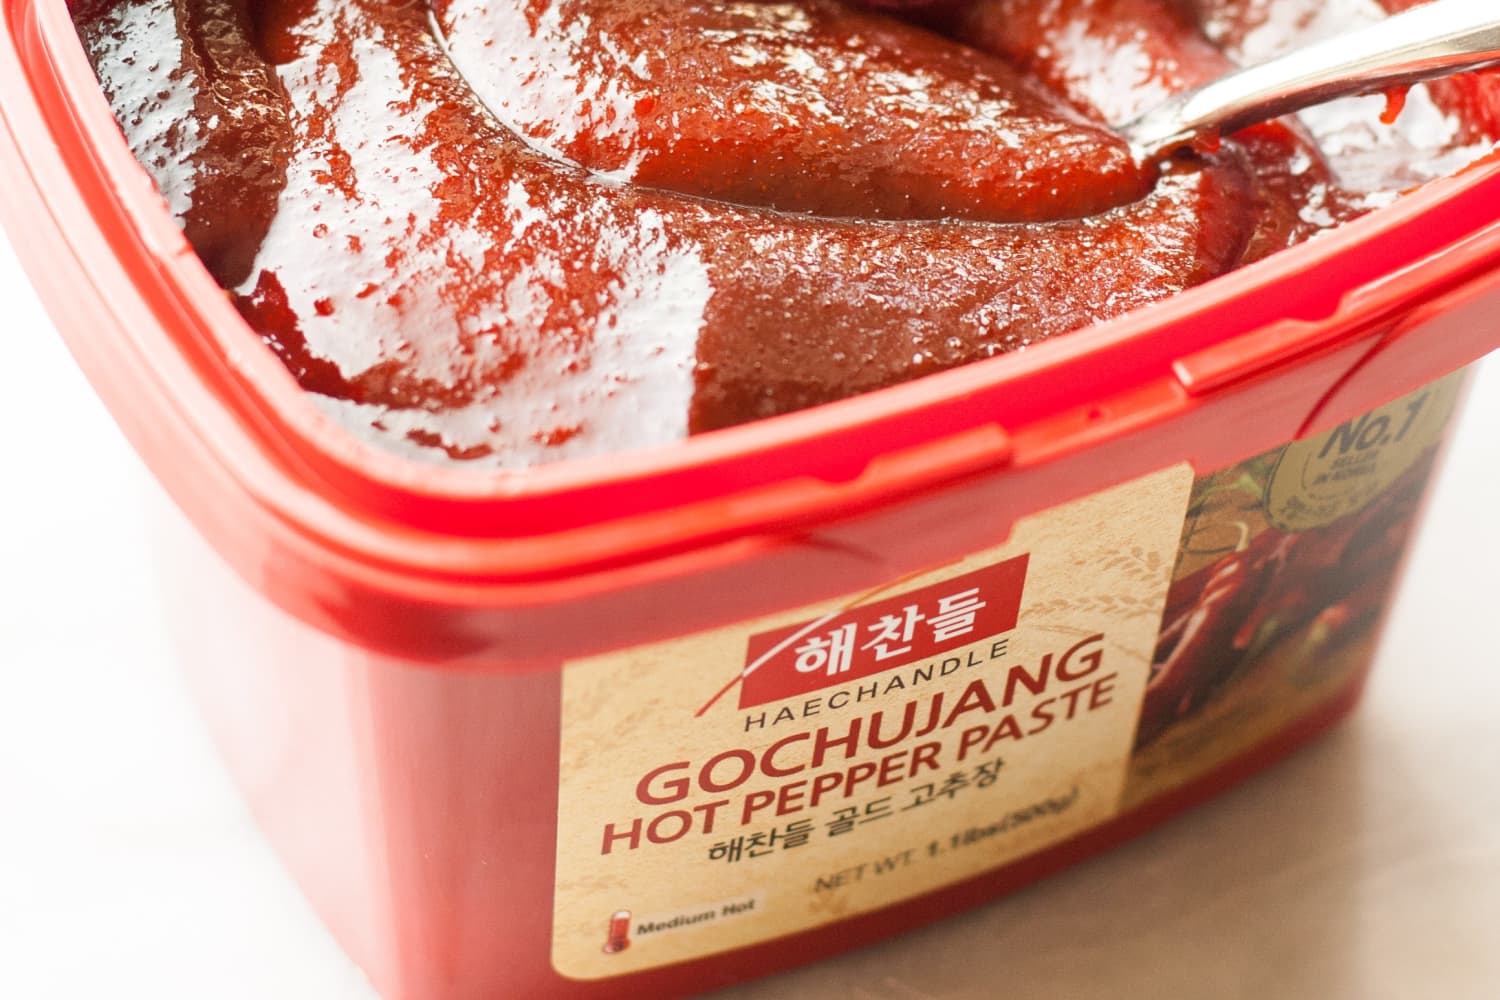 What is Gochujang?